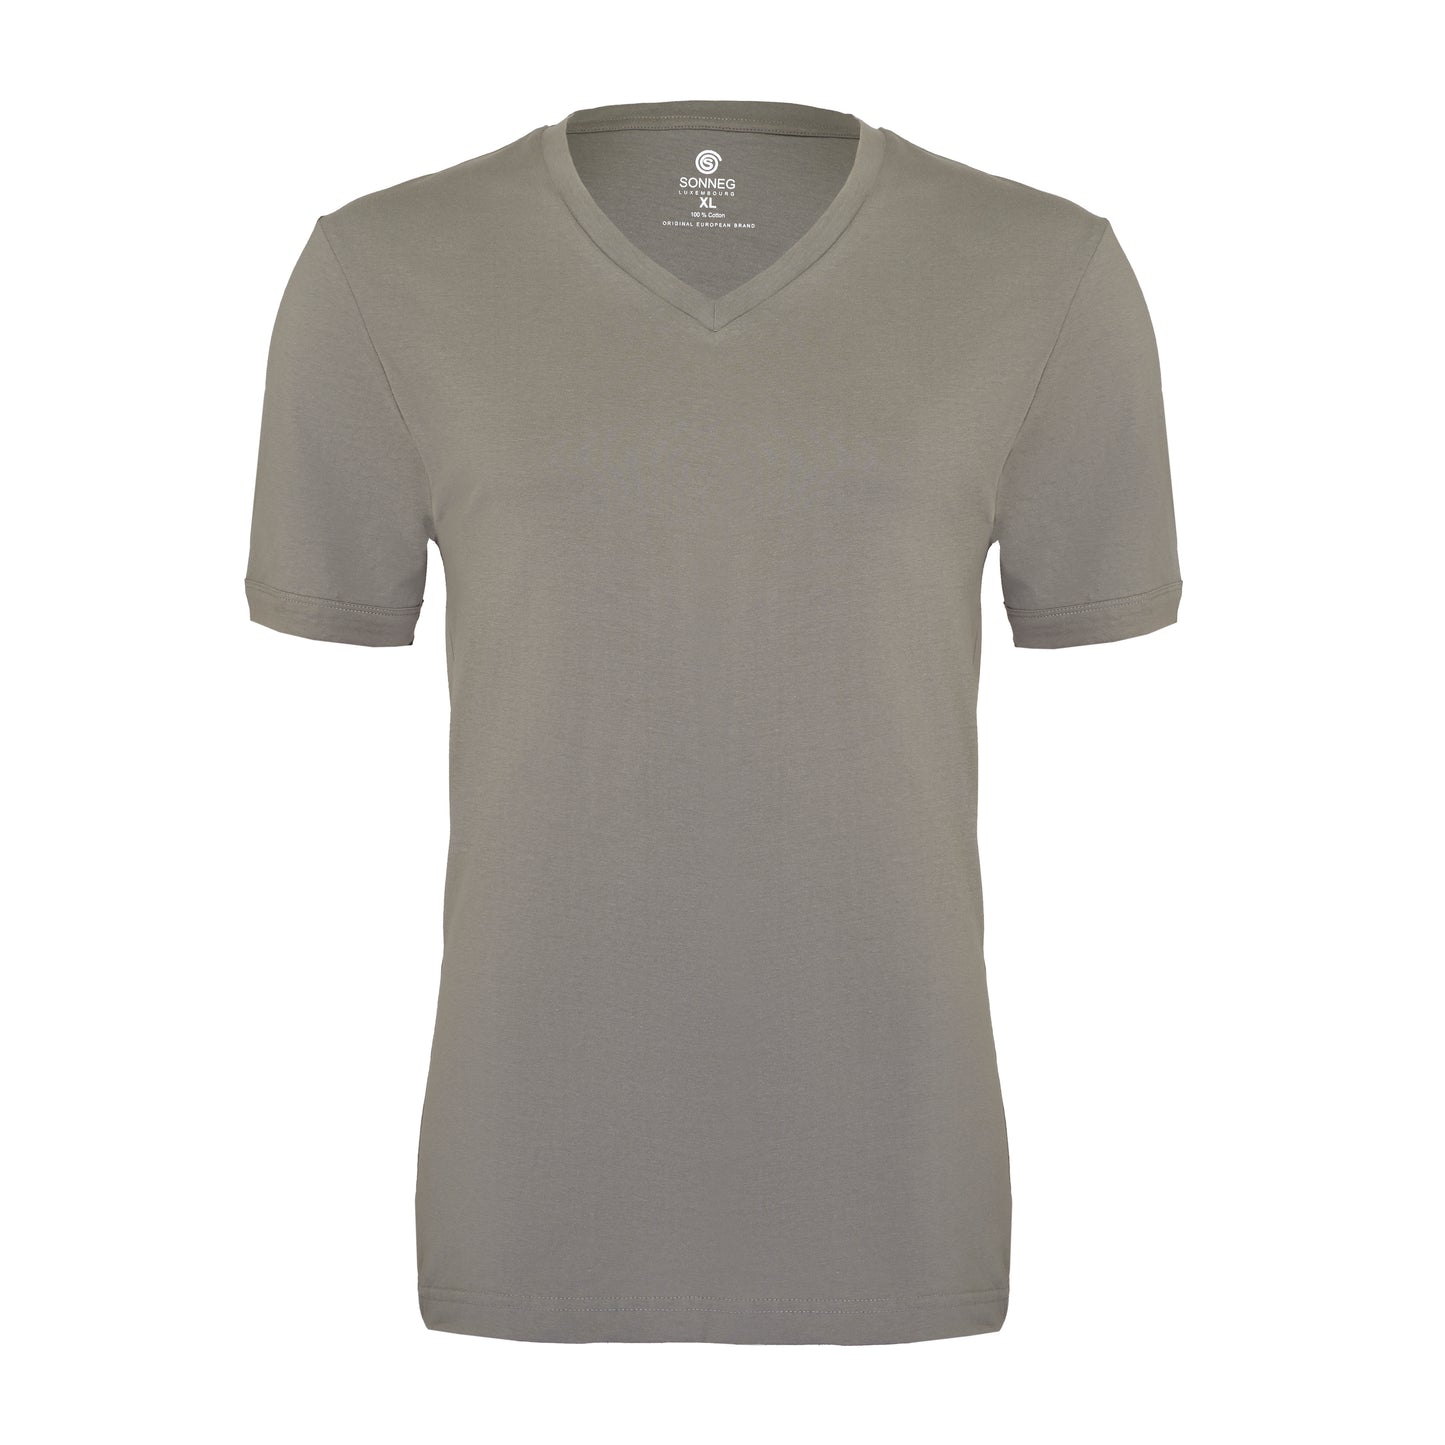 V-neck deep, ash grey, bodyfit T-shirt – pack of 2 or 4 tees